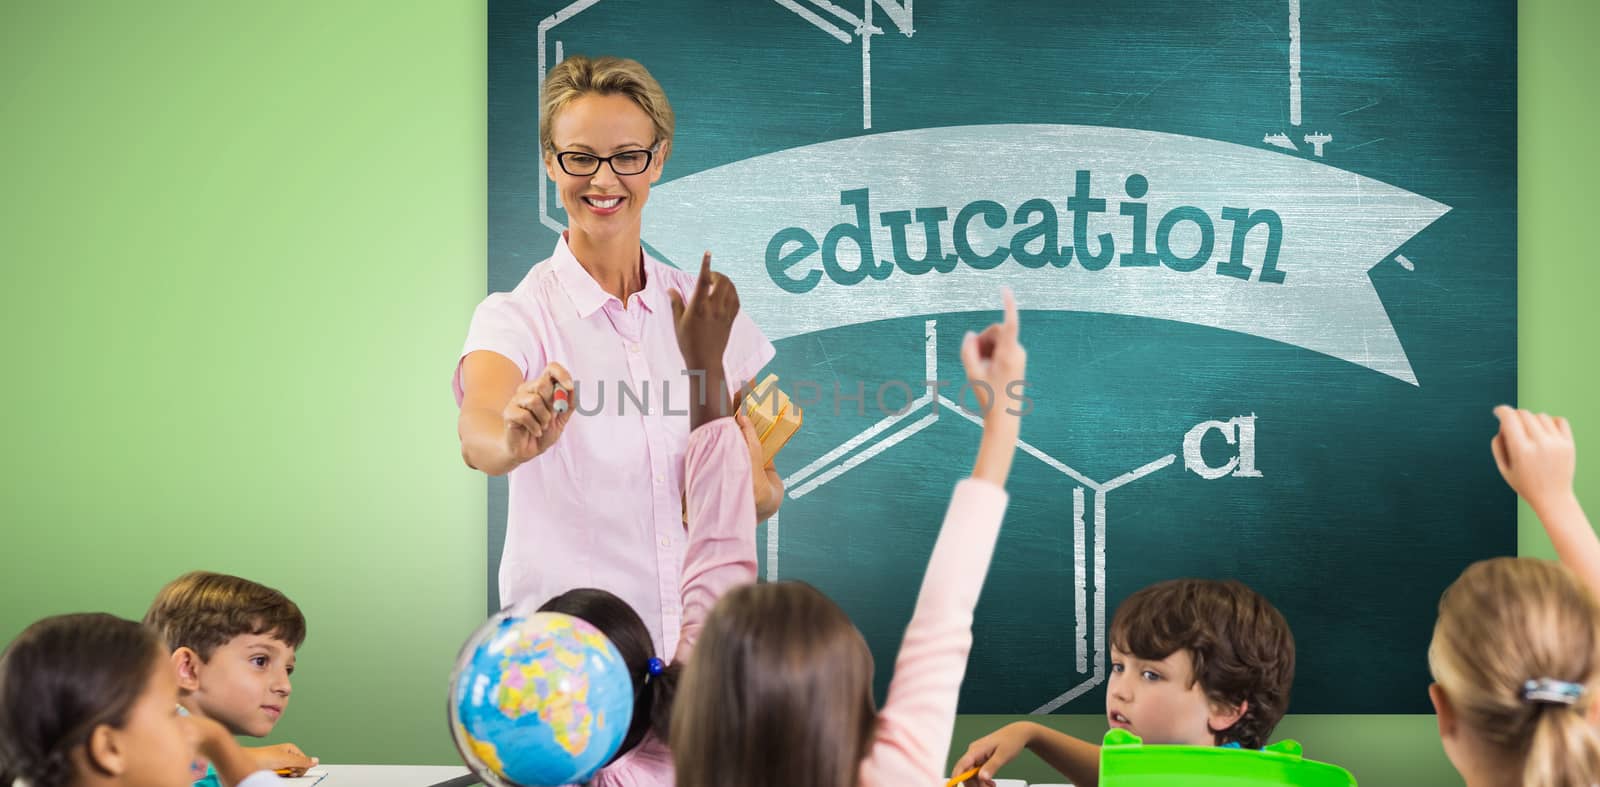 Students raising hands while teacher teaching against education against green chalkboard